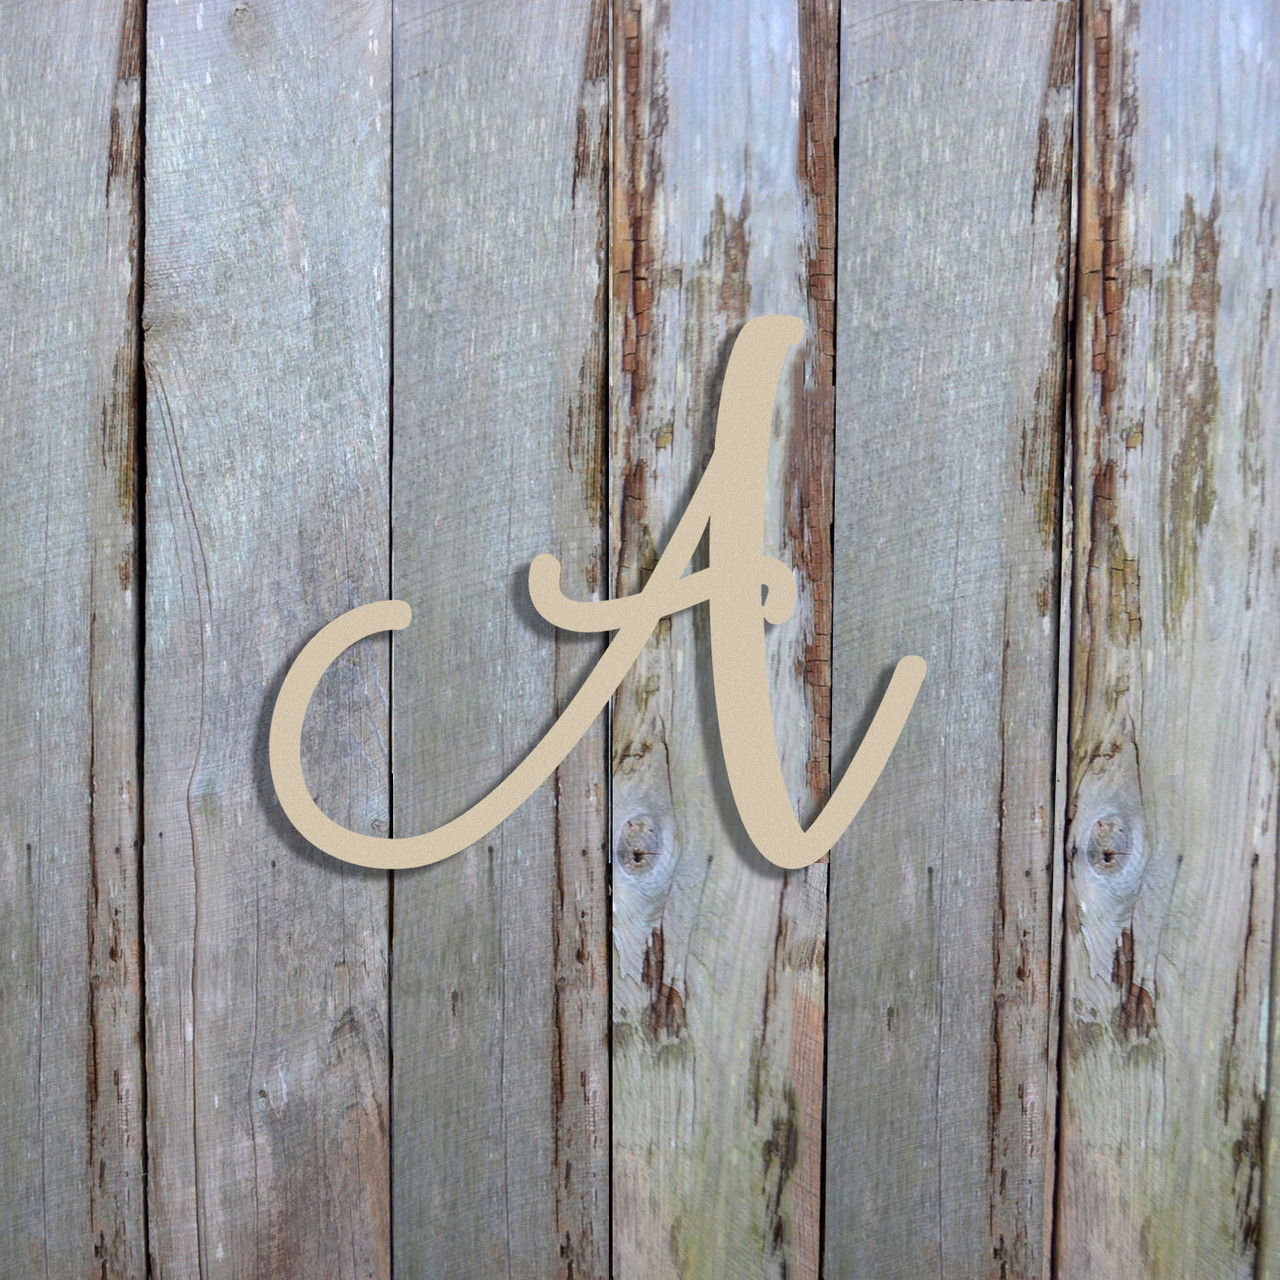 Distressed Barn Wood Letter, Alphabet Wall Decor